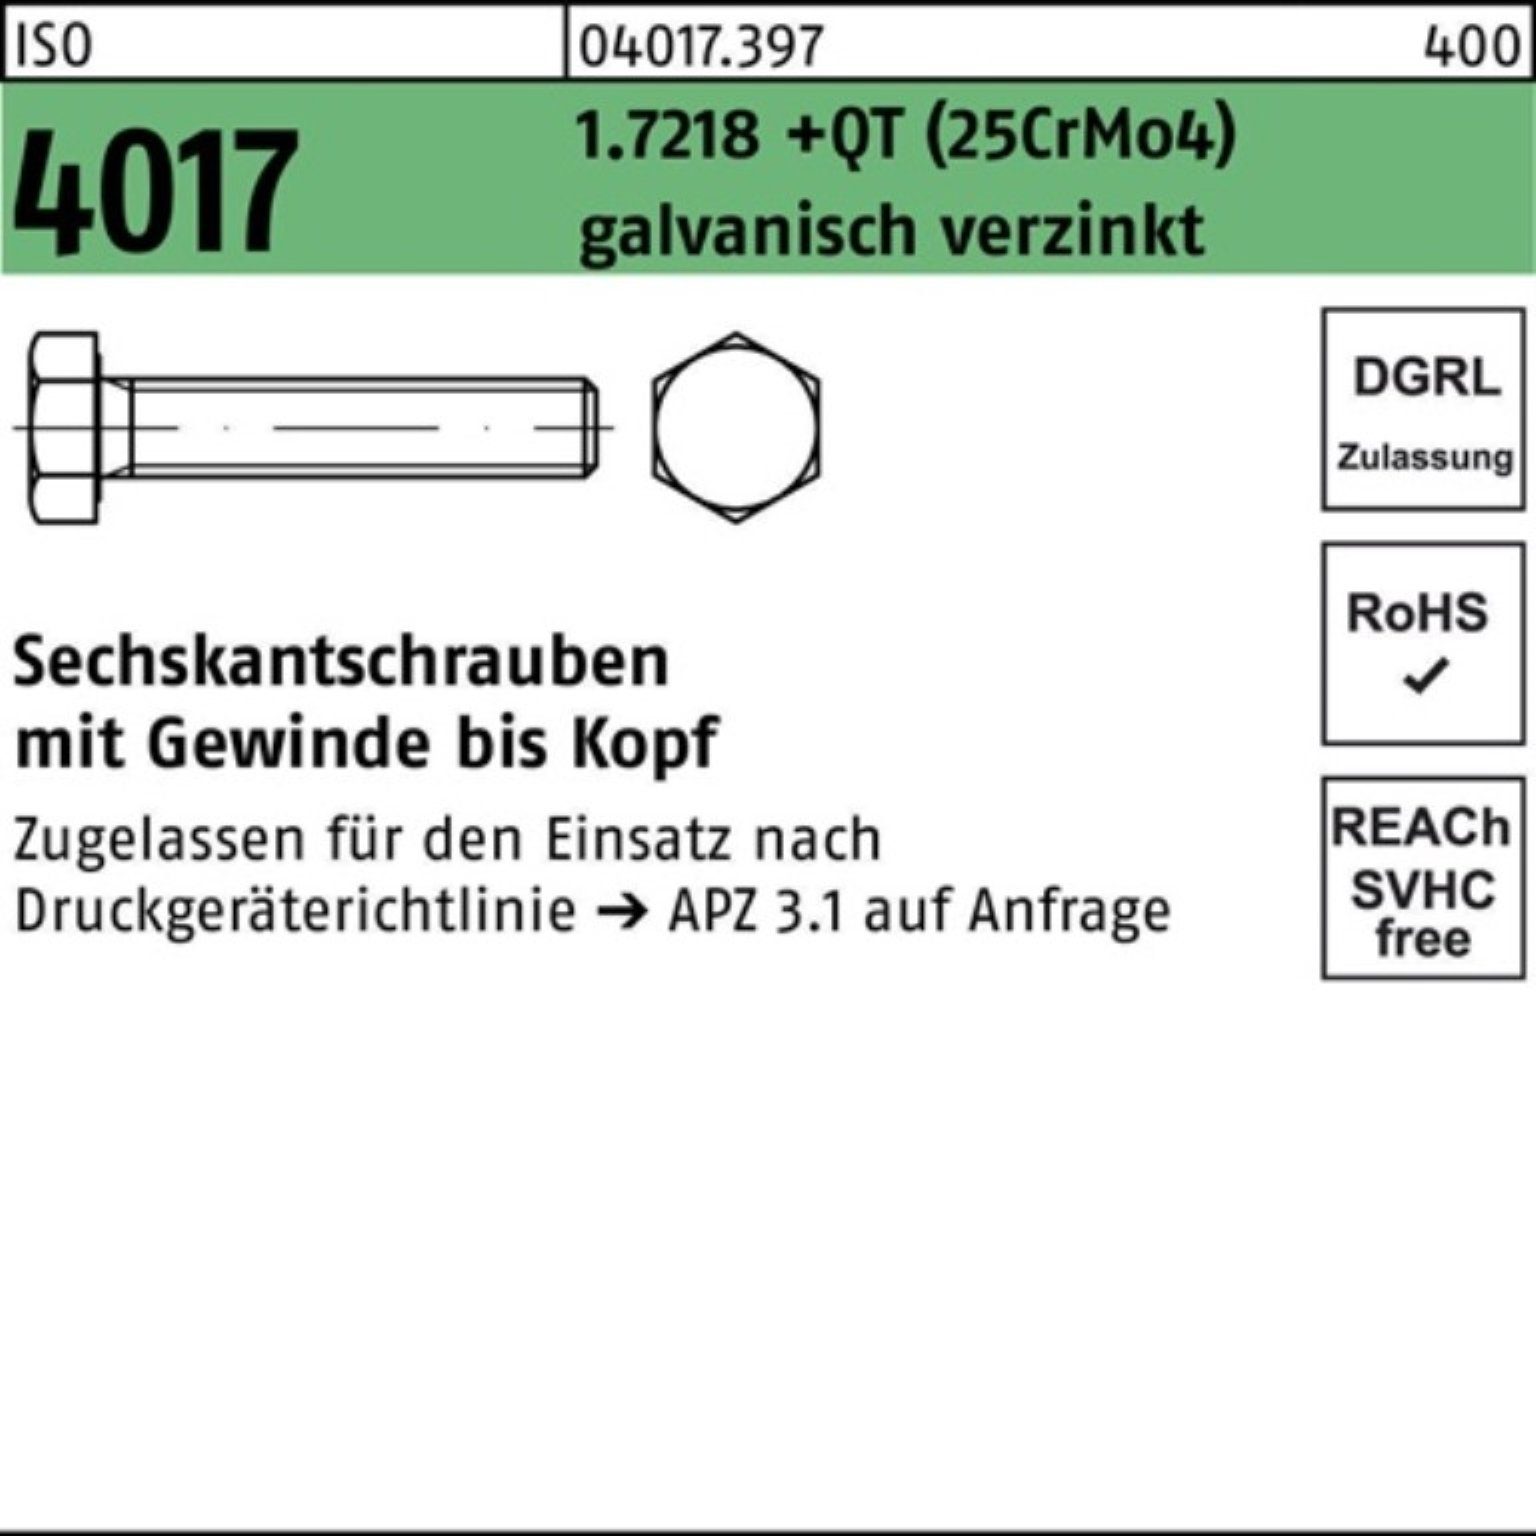 Sechskantschraube Bufab Pack Sechskantschraube +QT 1.7218 ISO M27x65 VG (25CrMo4) 4017 g 100er